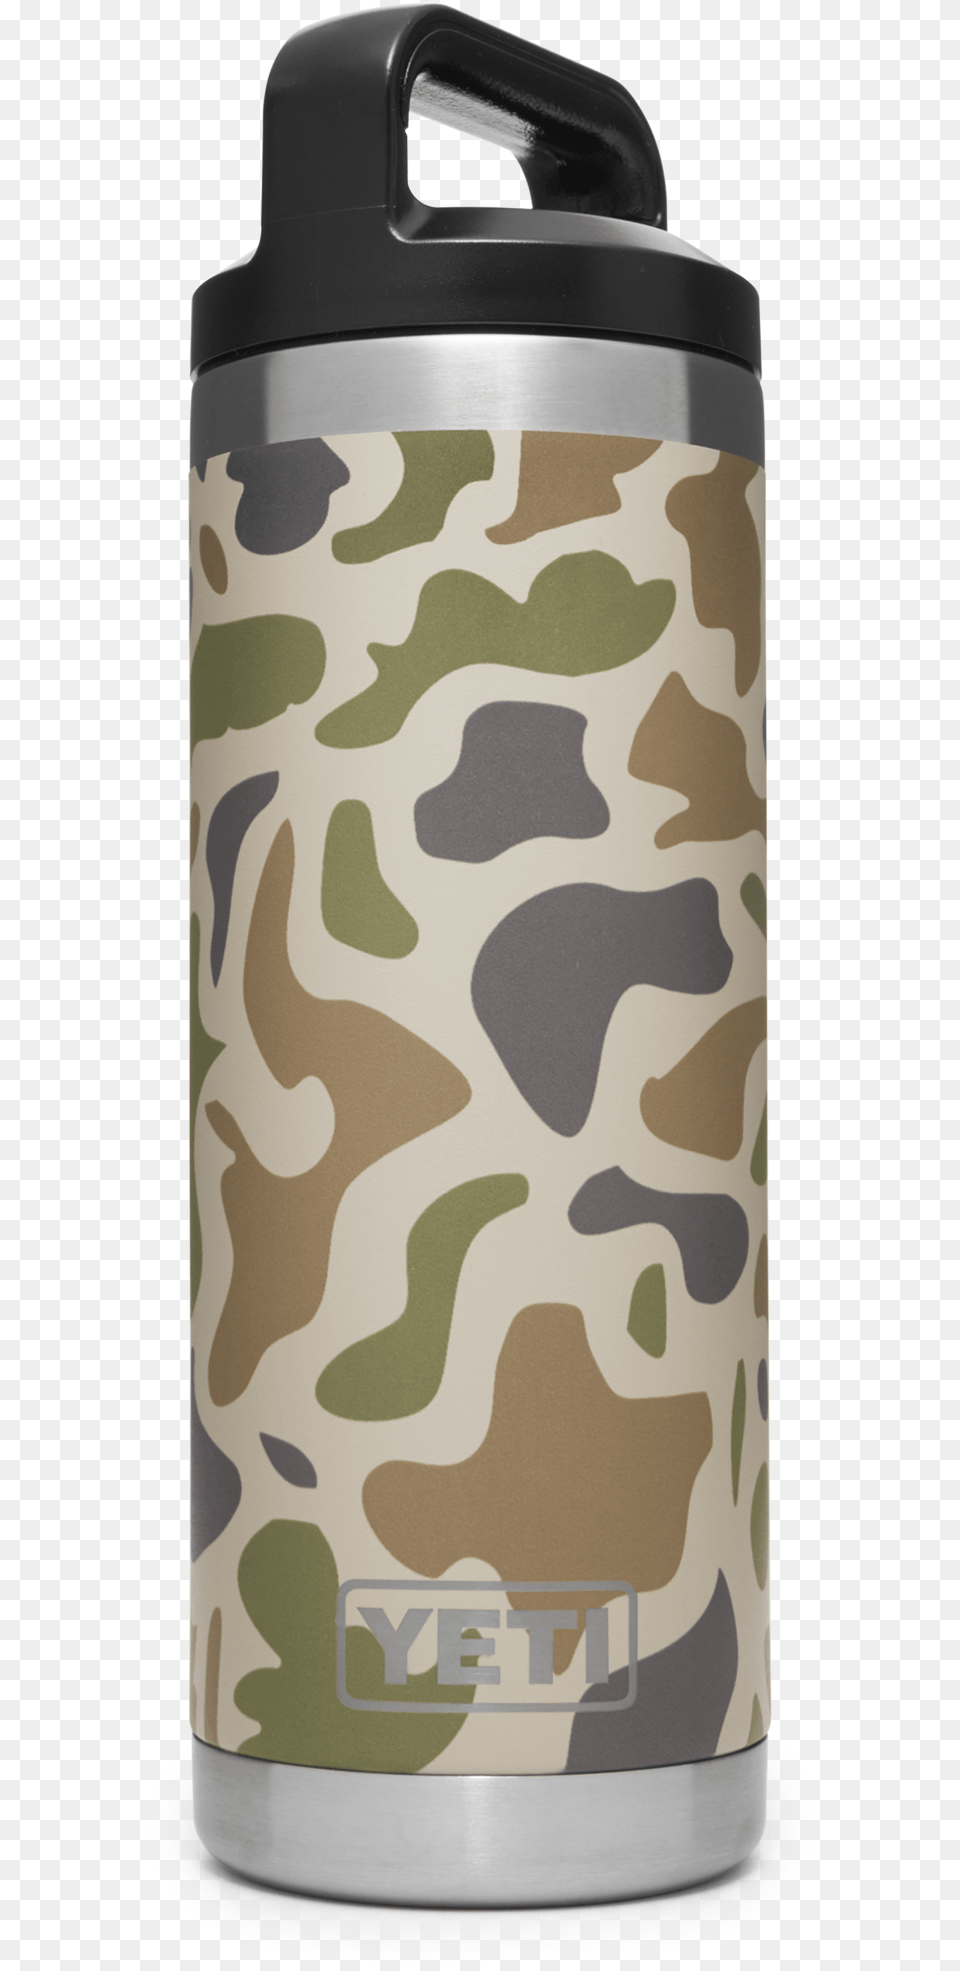 Bottle Yeti Rambler Bottle, Military, Military Uniform, Shaker Png Image